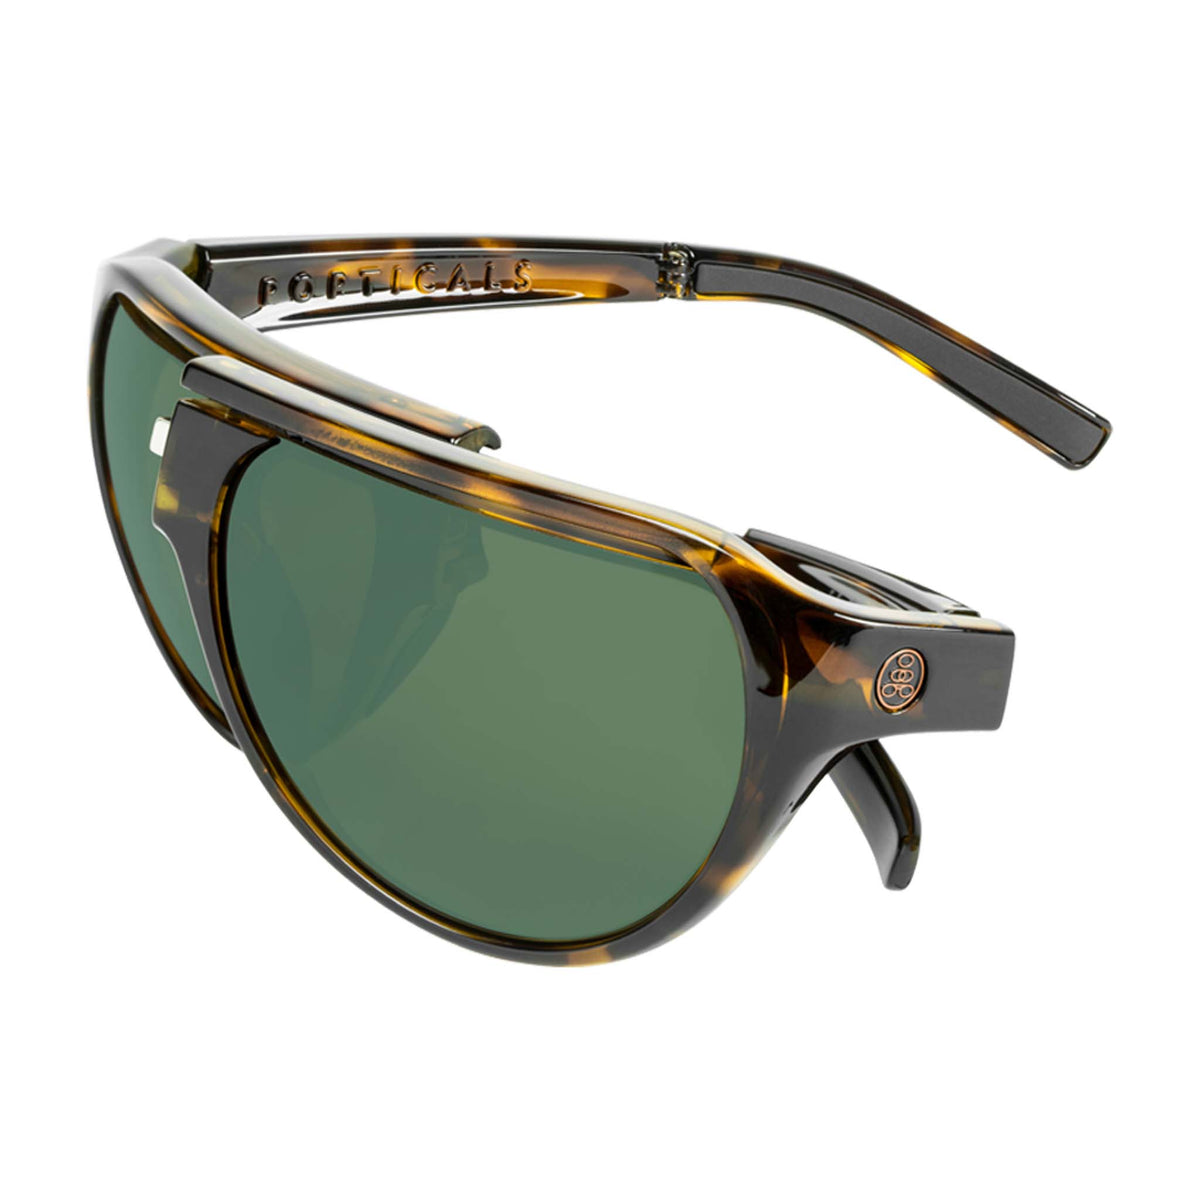 Popticals, Premium Compact Sunglasses, PopAir, 300010-CTEP, Polarized Sunglasses, Gloss Tortoise Frame, Green Lenses, Spider View